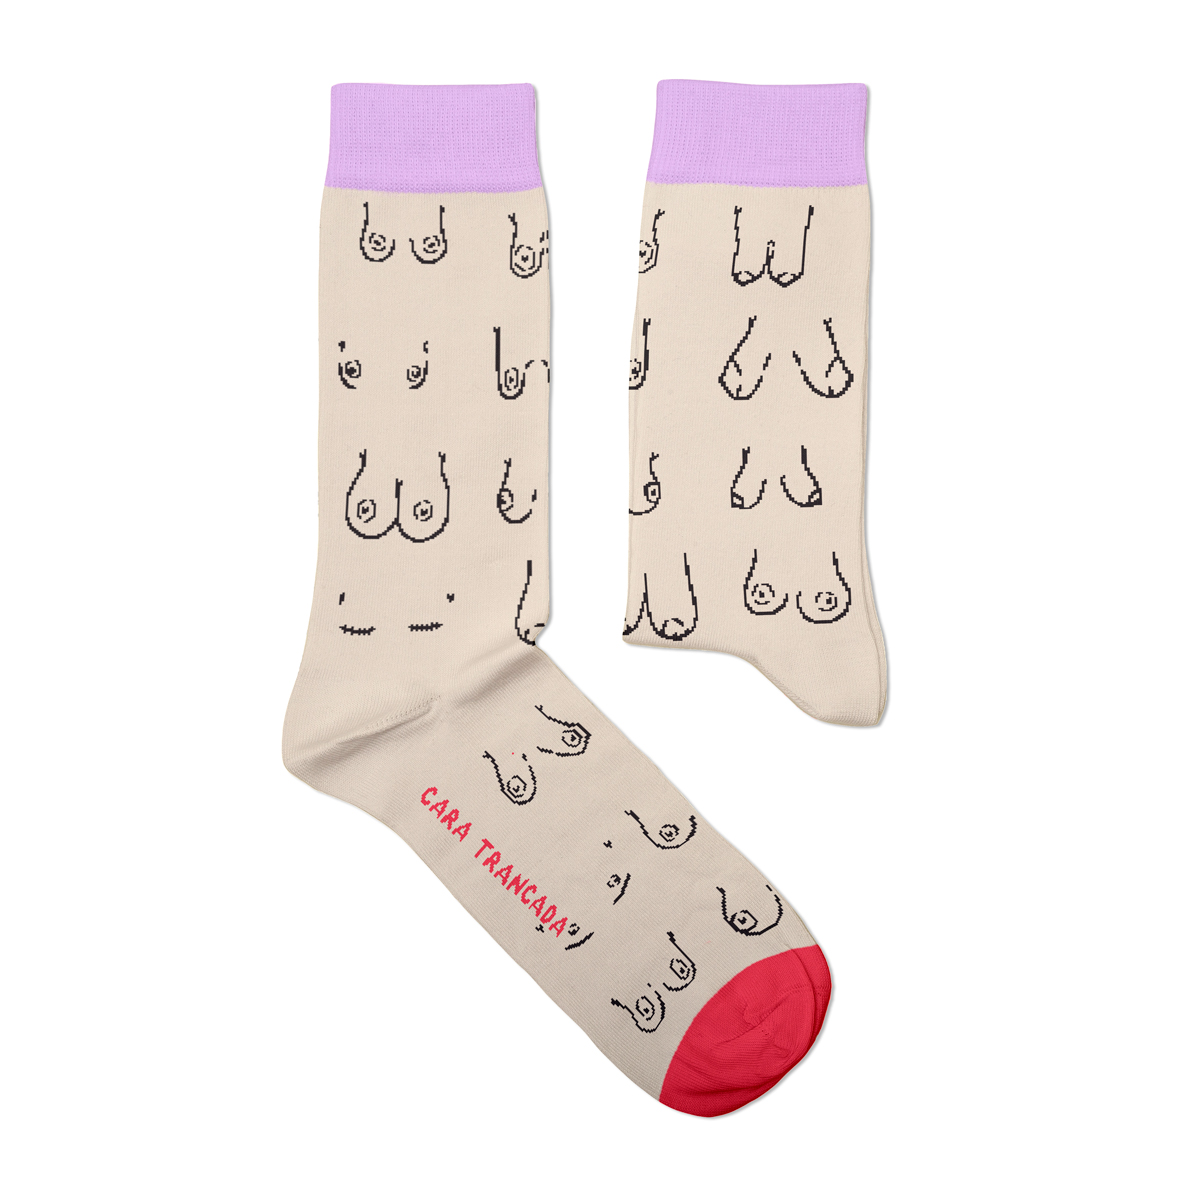 Tits Socks, designed in collaboration with @caratrancada_

Fun for passionate people.

#funsocks #sockaffairs #artsocks #musicsocks #heeltread #curatorsocks #dancingsocks #animalprint #artcollection #heeltread #fathersday #iamwoman #caratrancada